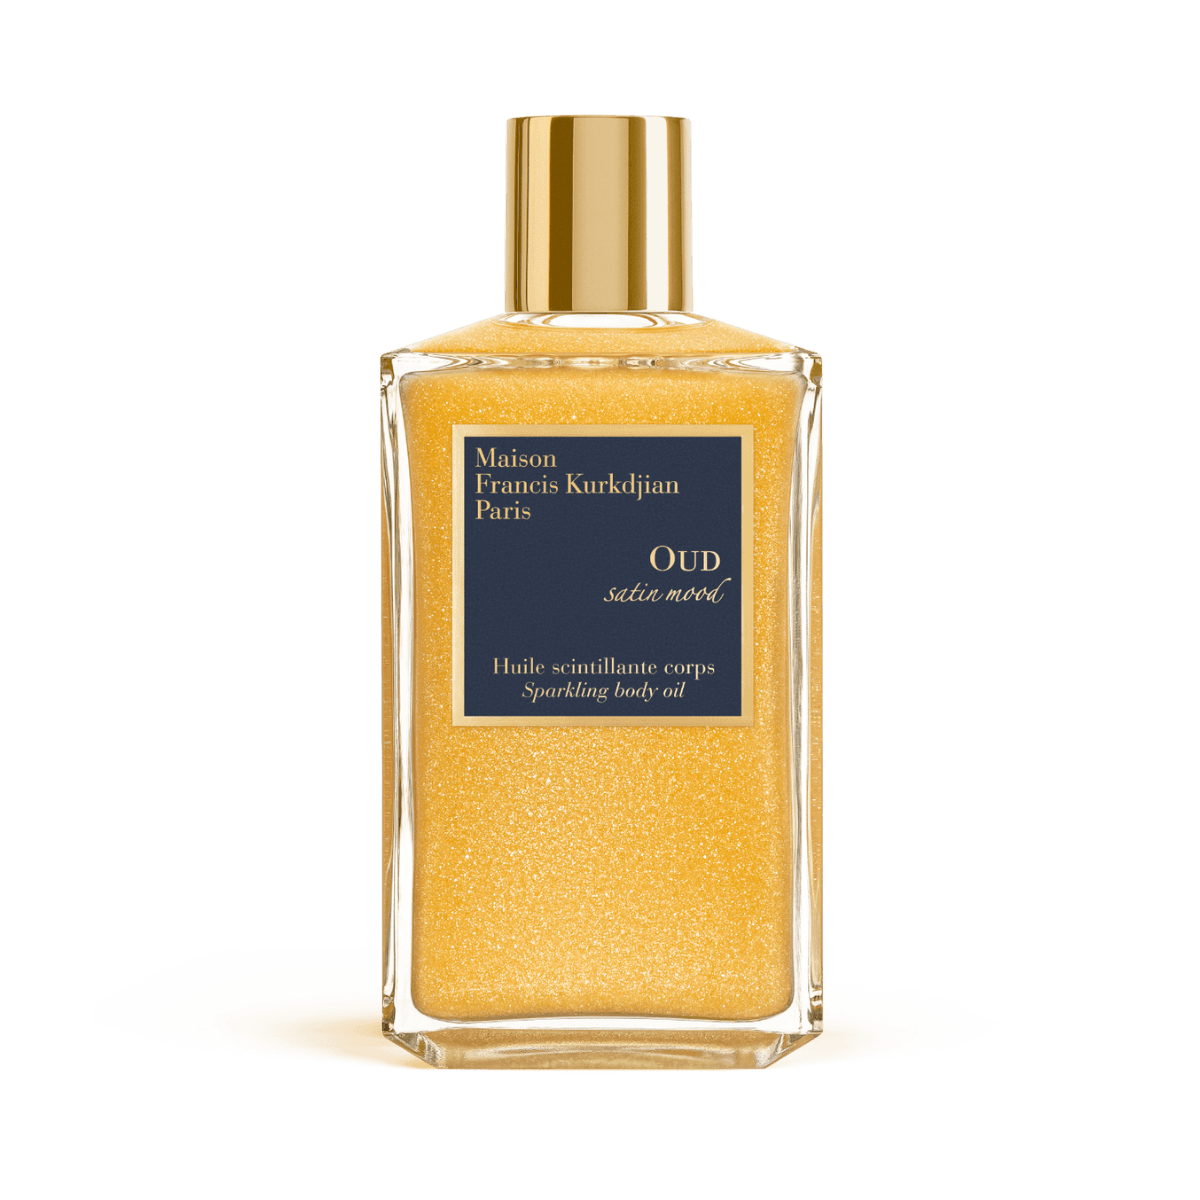 Image of OUD satin mood sparkling body oil by the perfume brand Maison Francis Kurkdjian